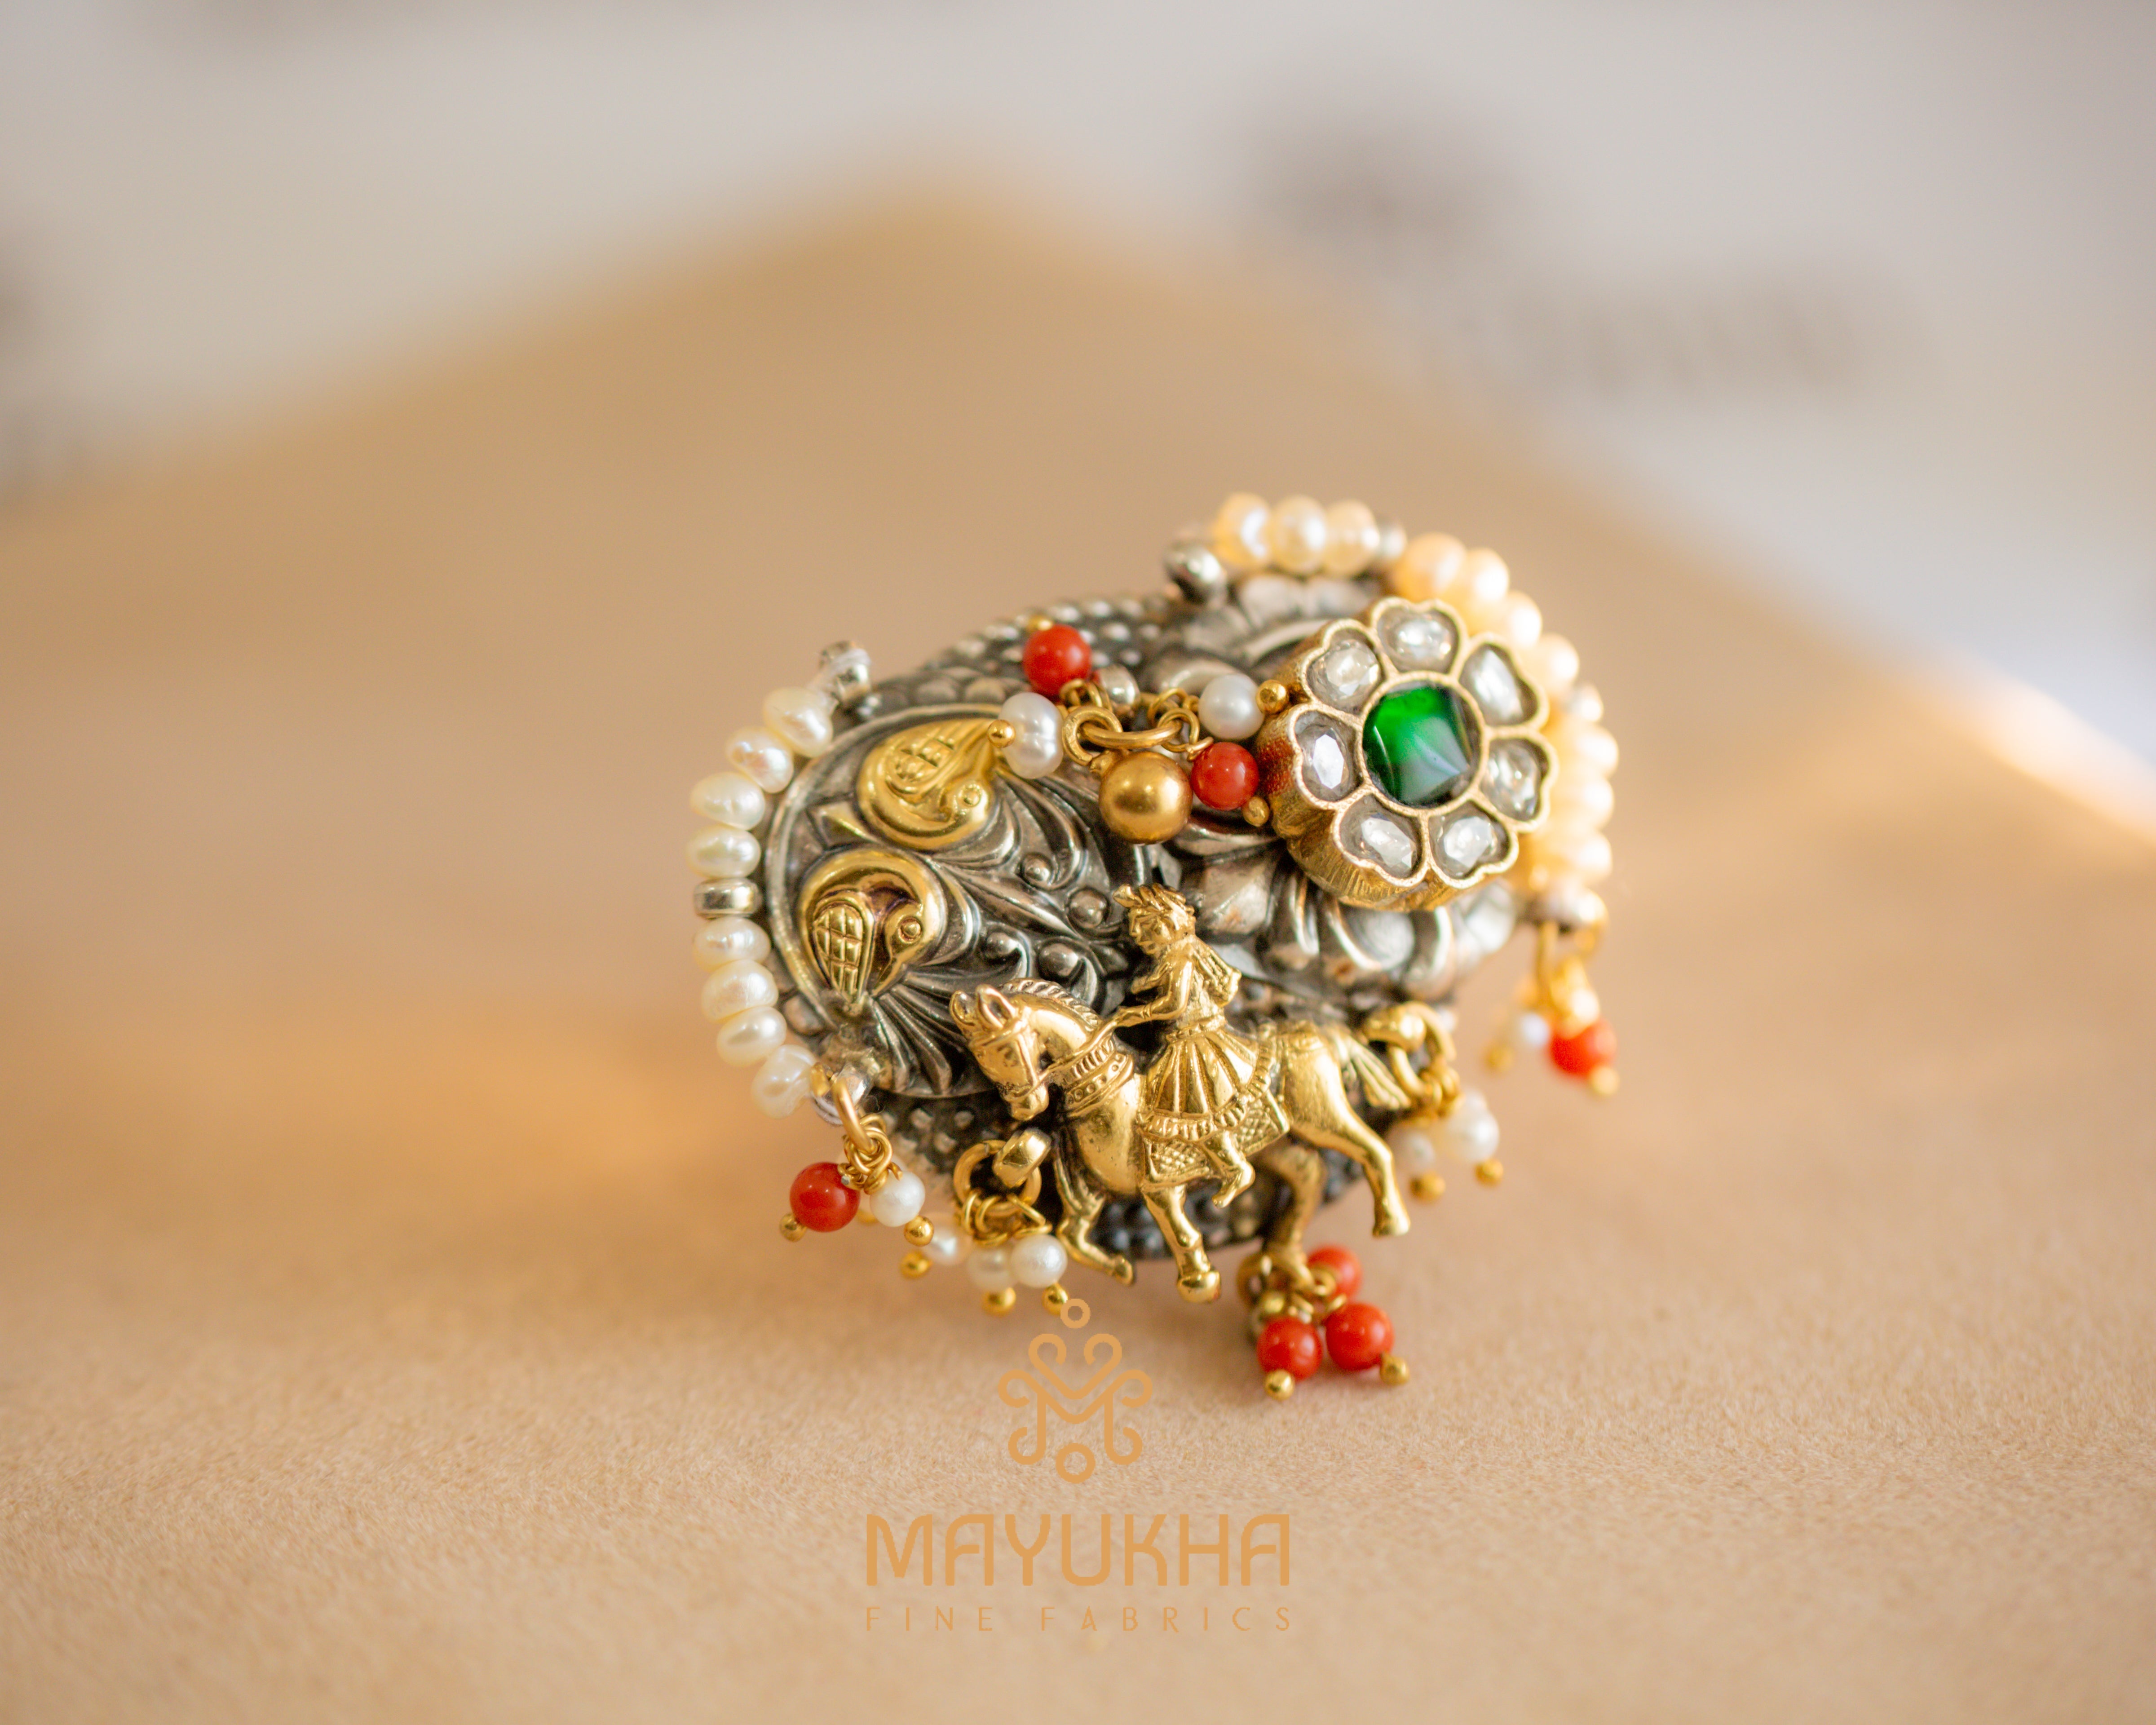 Maharaja Sterling Silver Citrine Dome Ring – Tenenbaum Jewelers